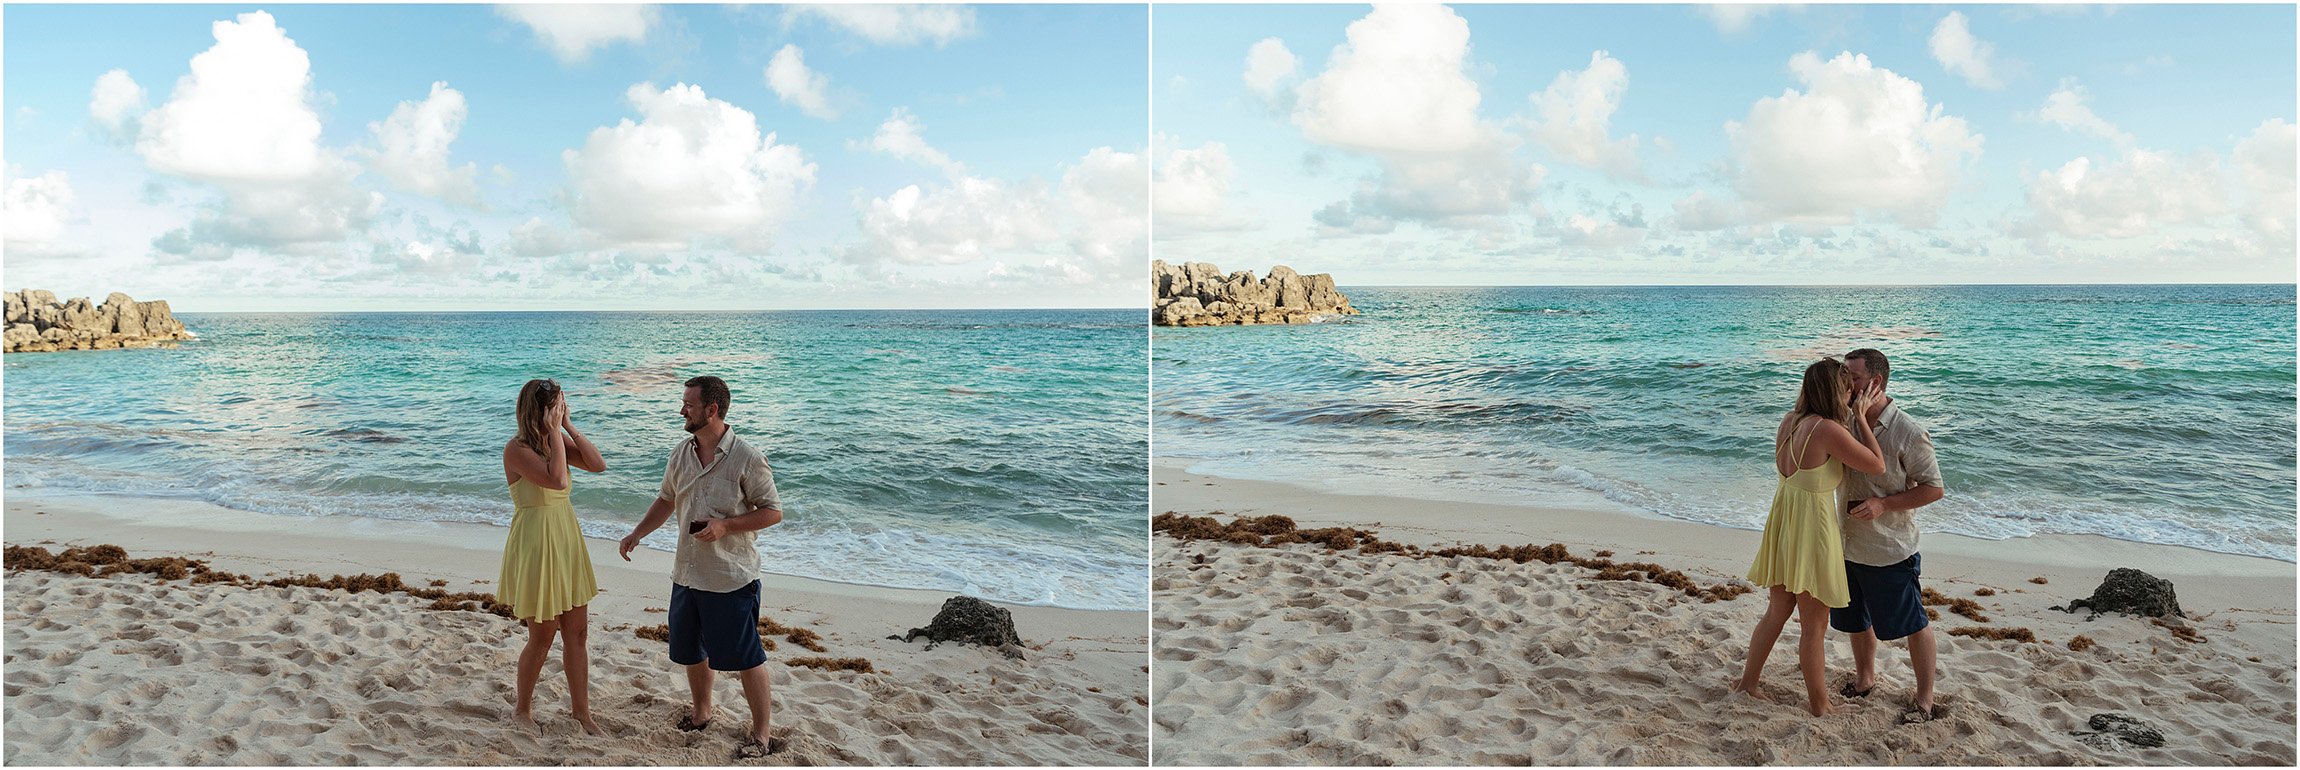 Bermuda Proposal Photographer_Church Bay Beach_©FianderFoto_007.jpg